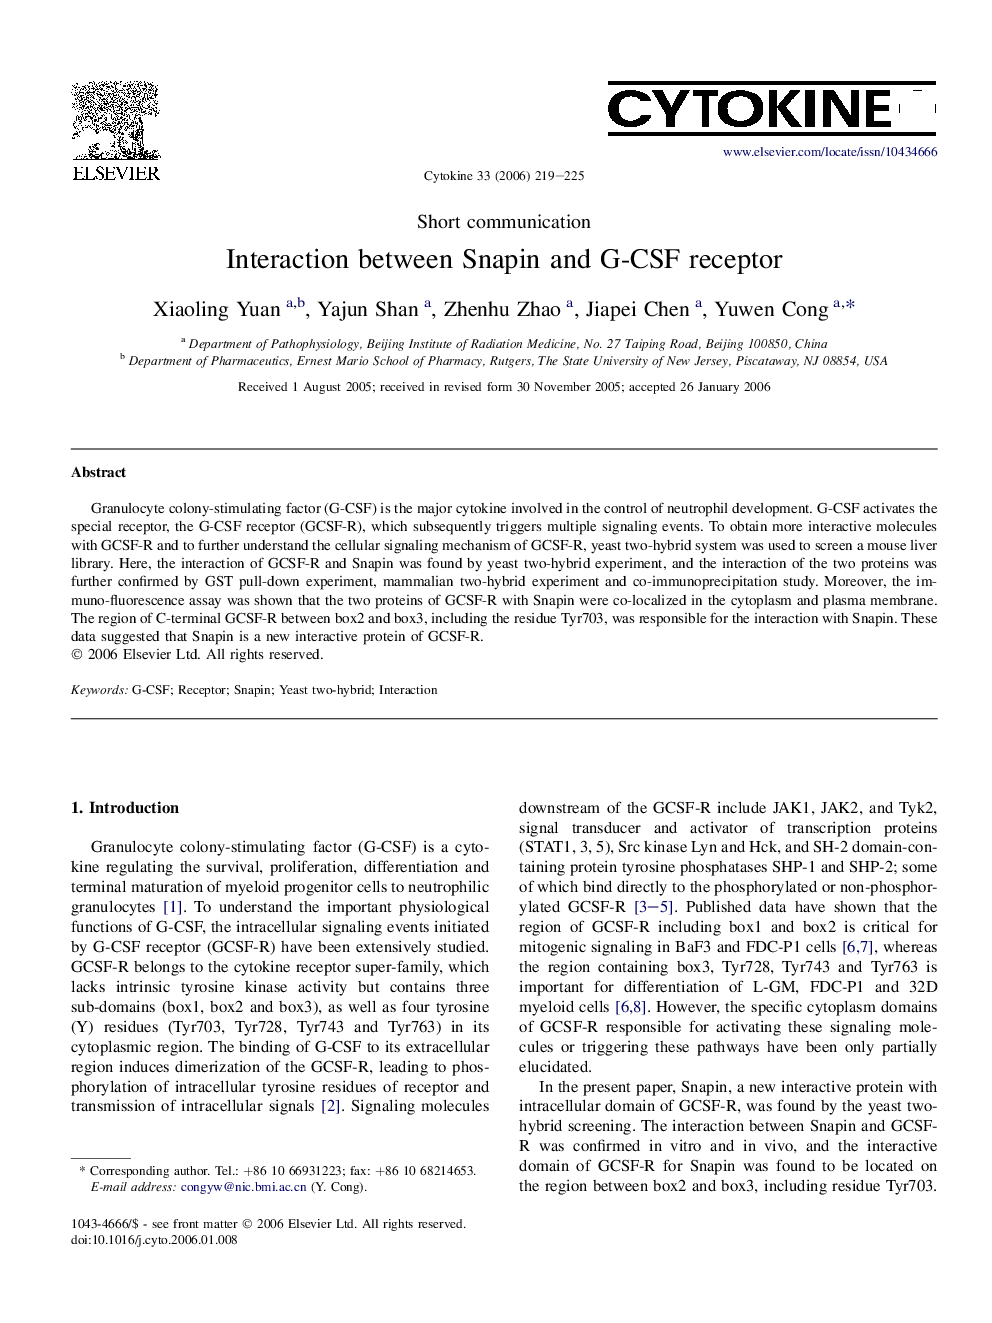 Interaction between Snapin and G-CSF receptor